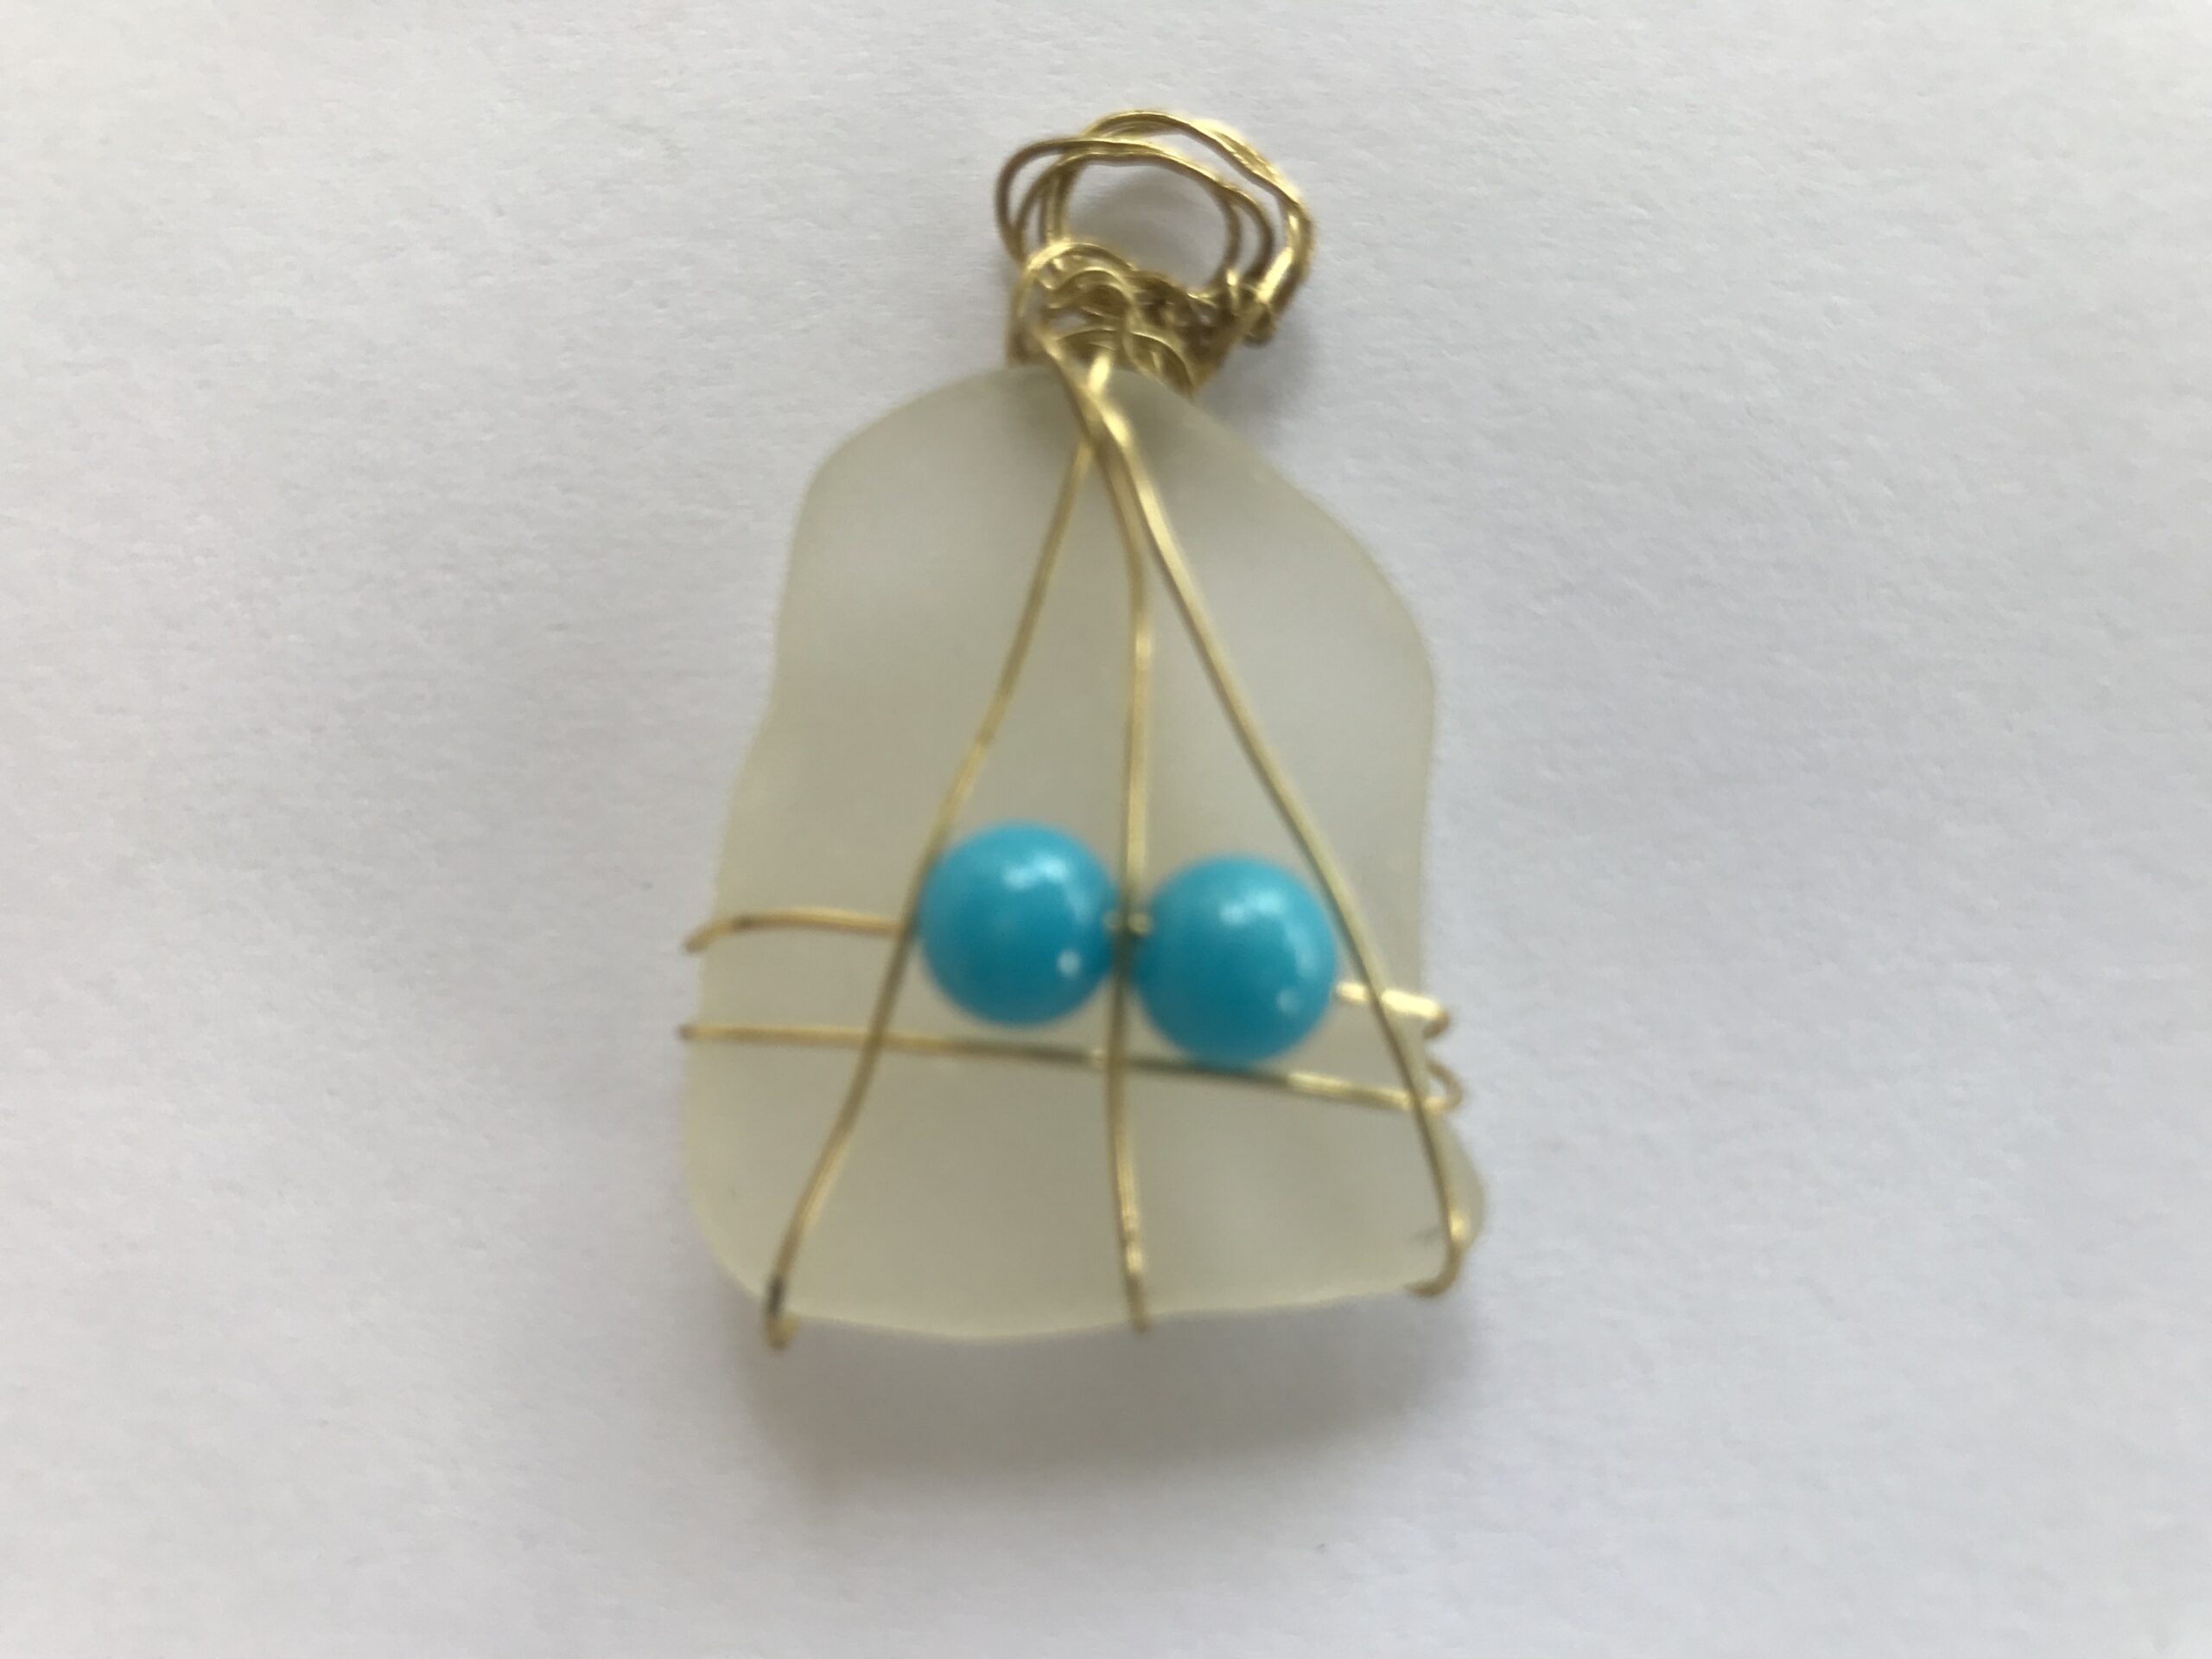 Palm Beach sea glass pendant